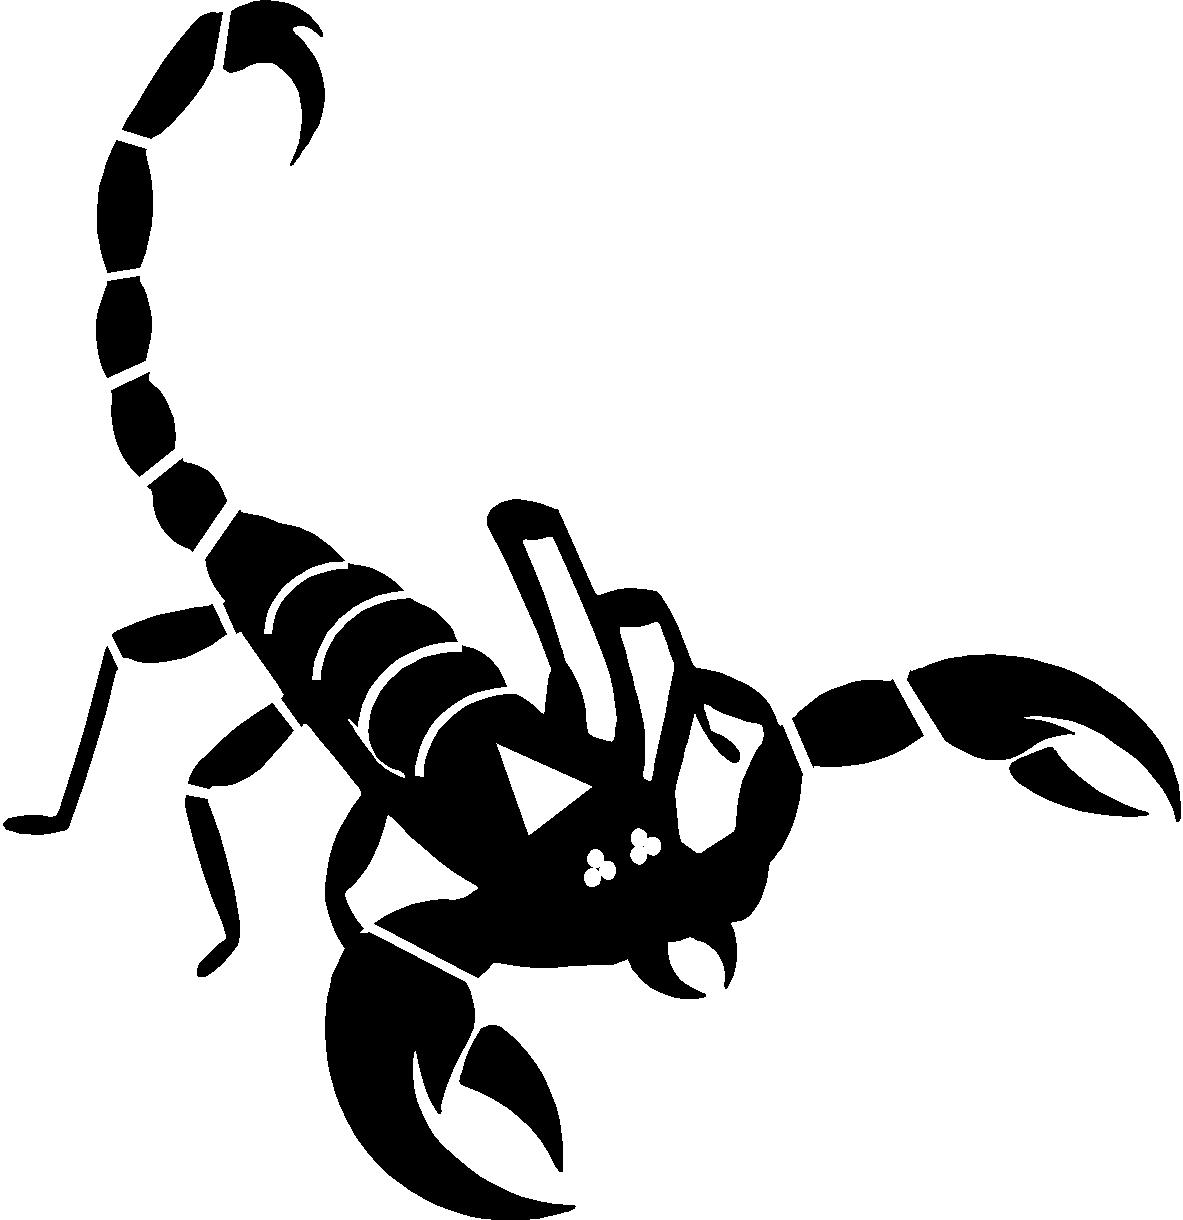 Skorpion, Insekt, Silhouette,